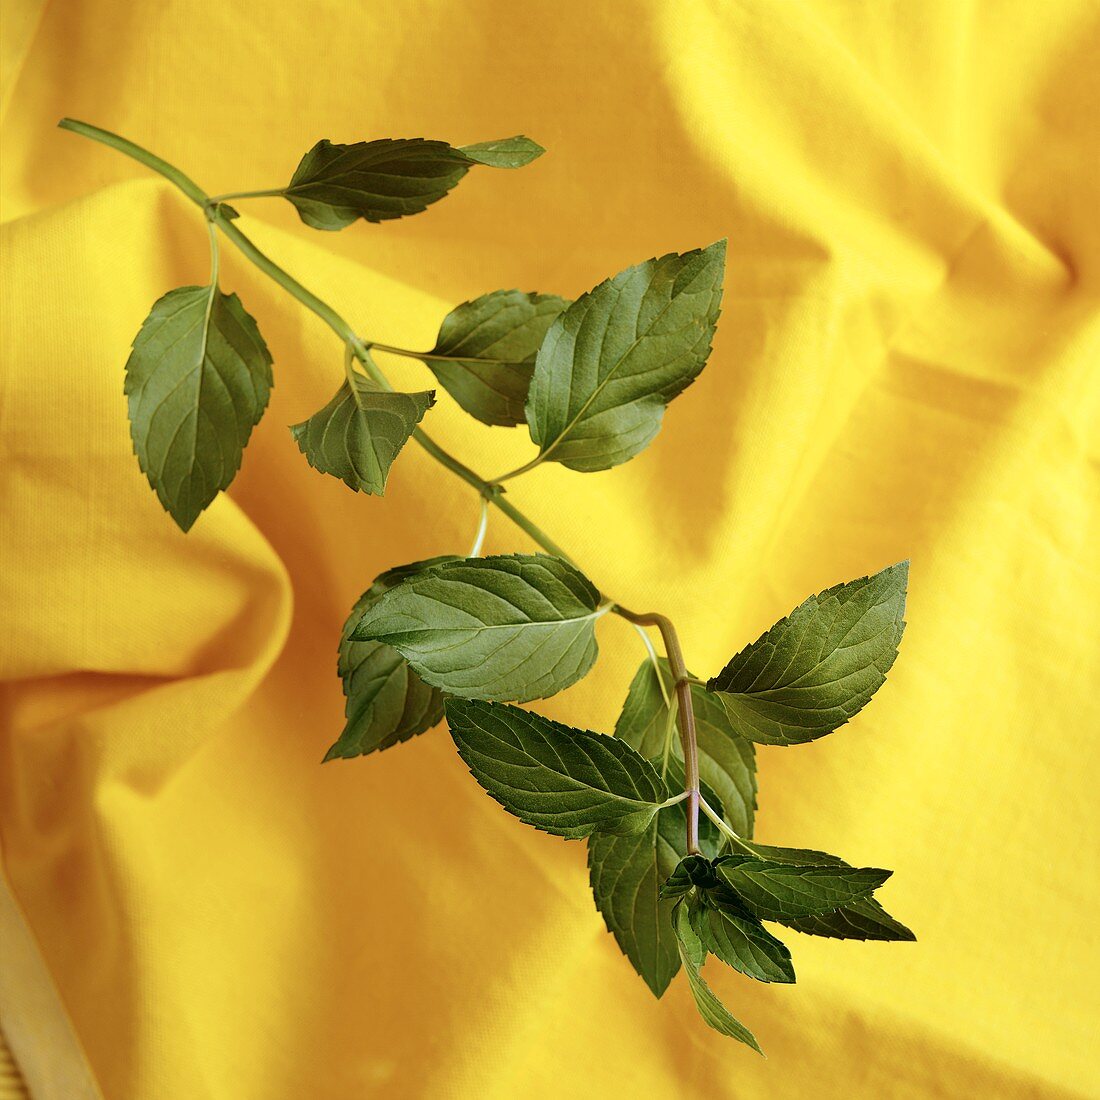 Stem of Oregano Plant with Oregano Leaves, Yellow Background